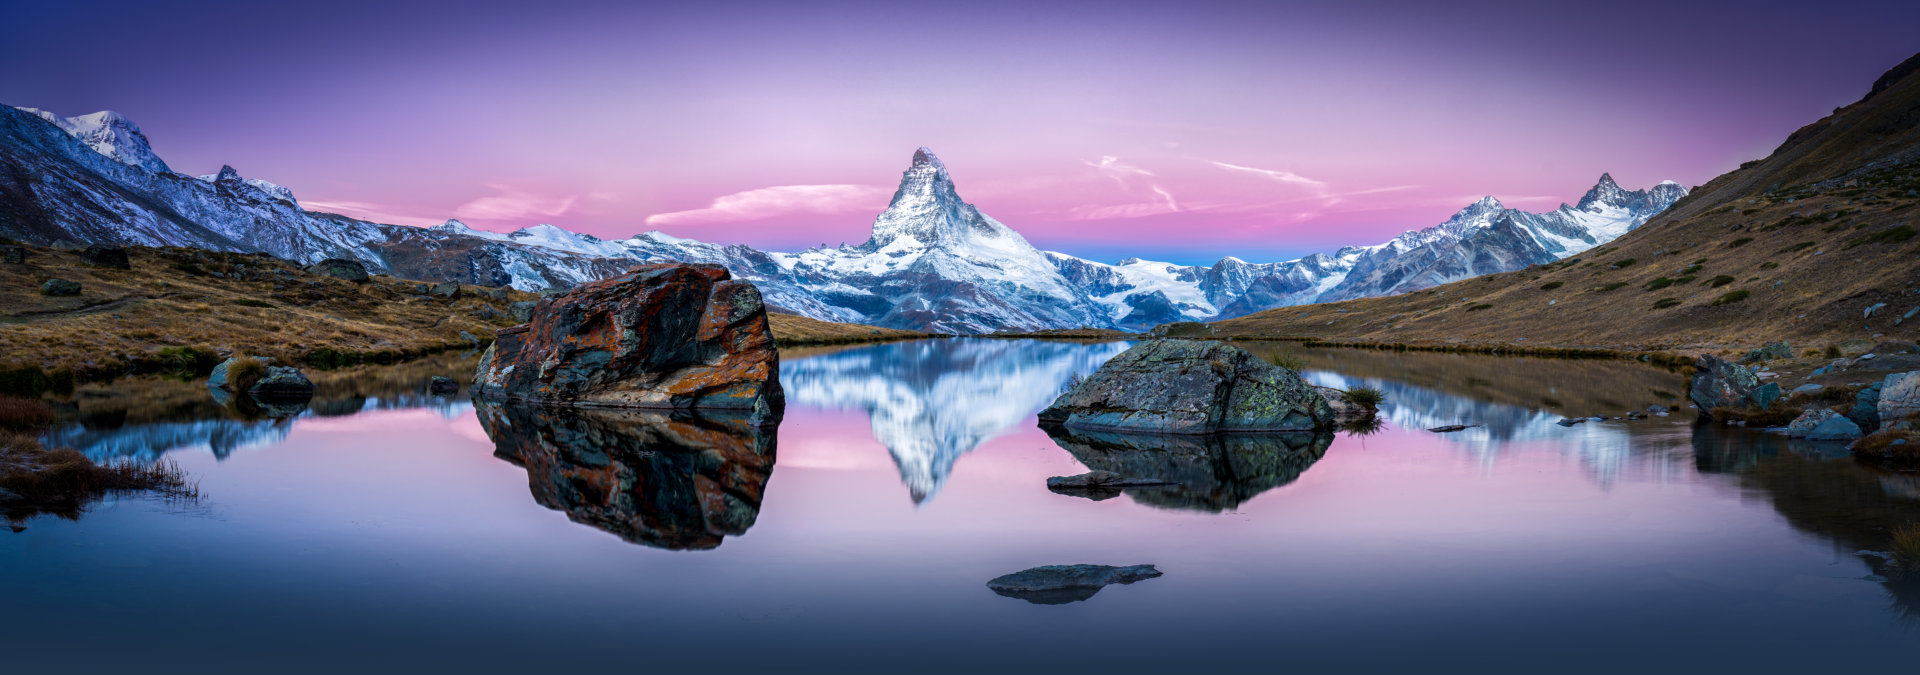 Header Image - Matterhorn Panorama